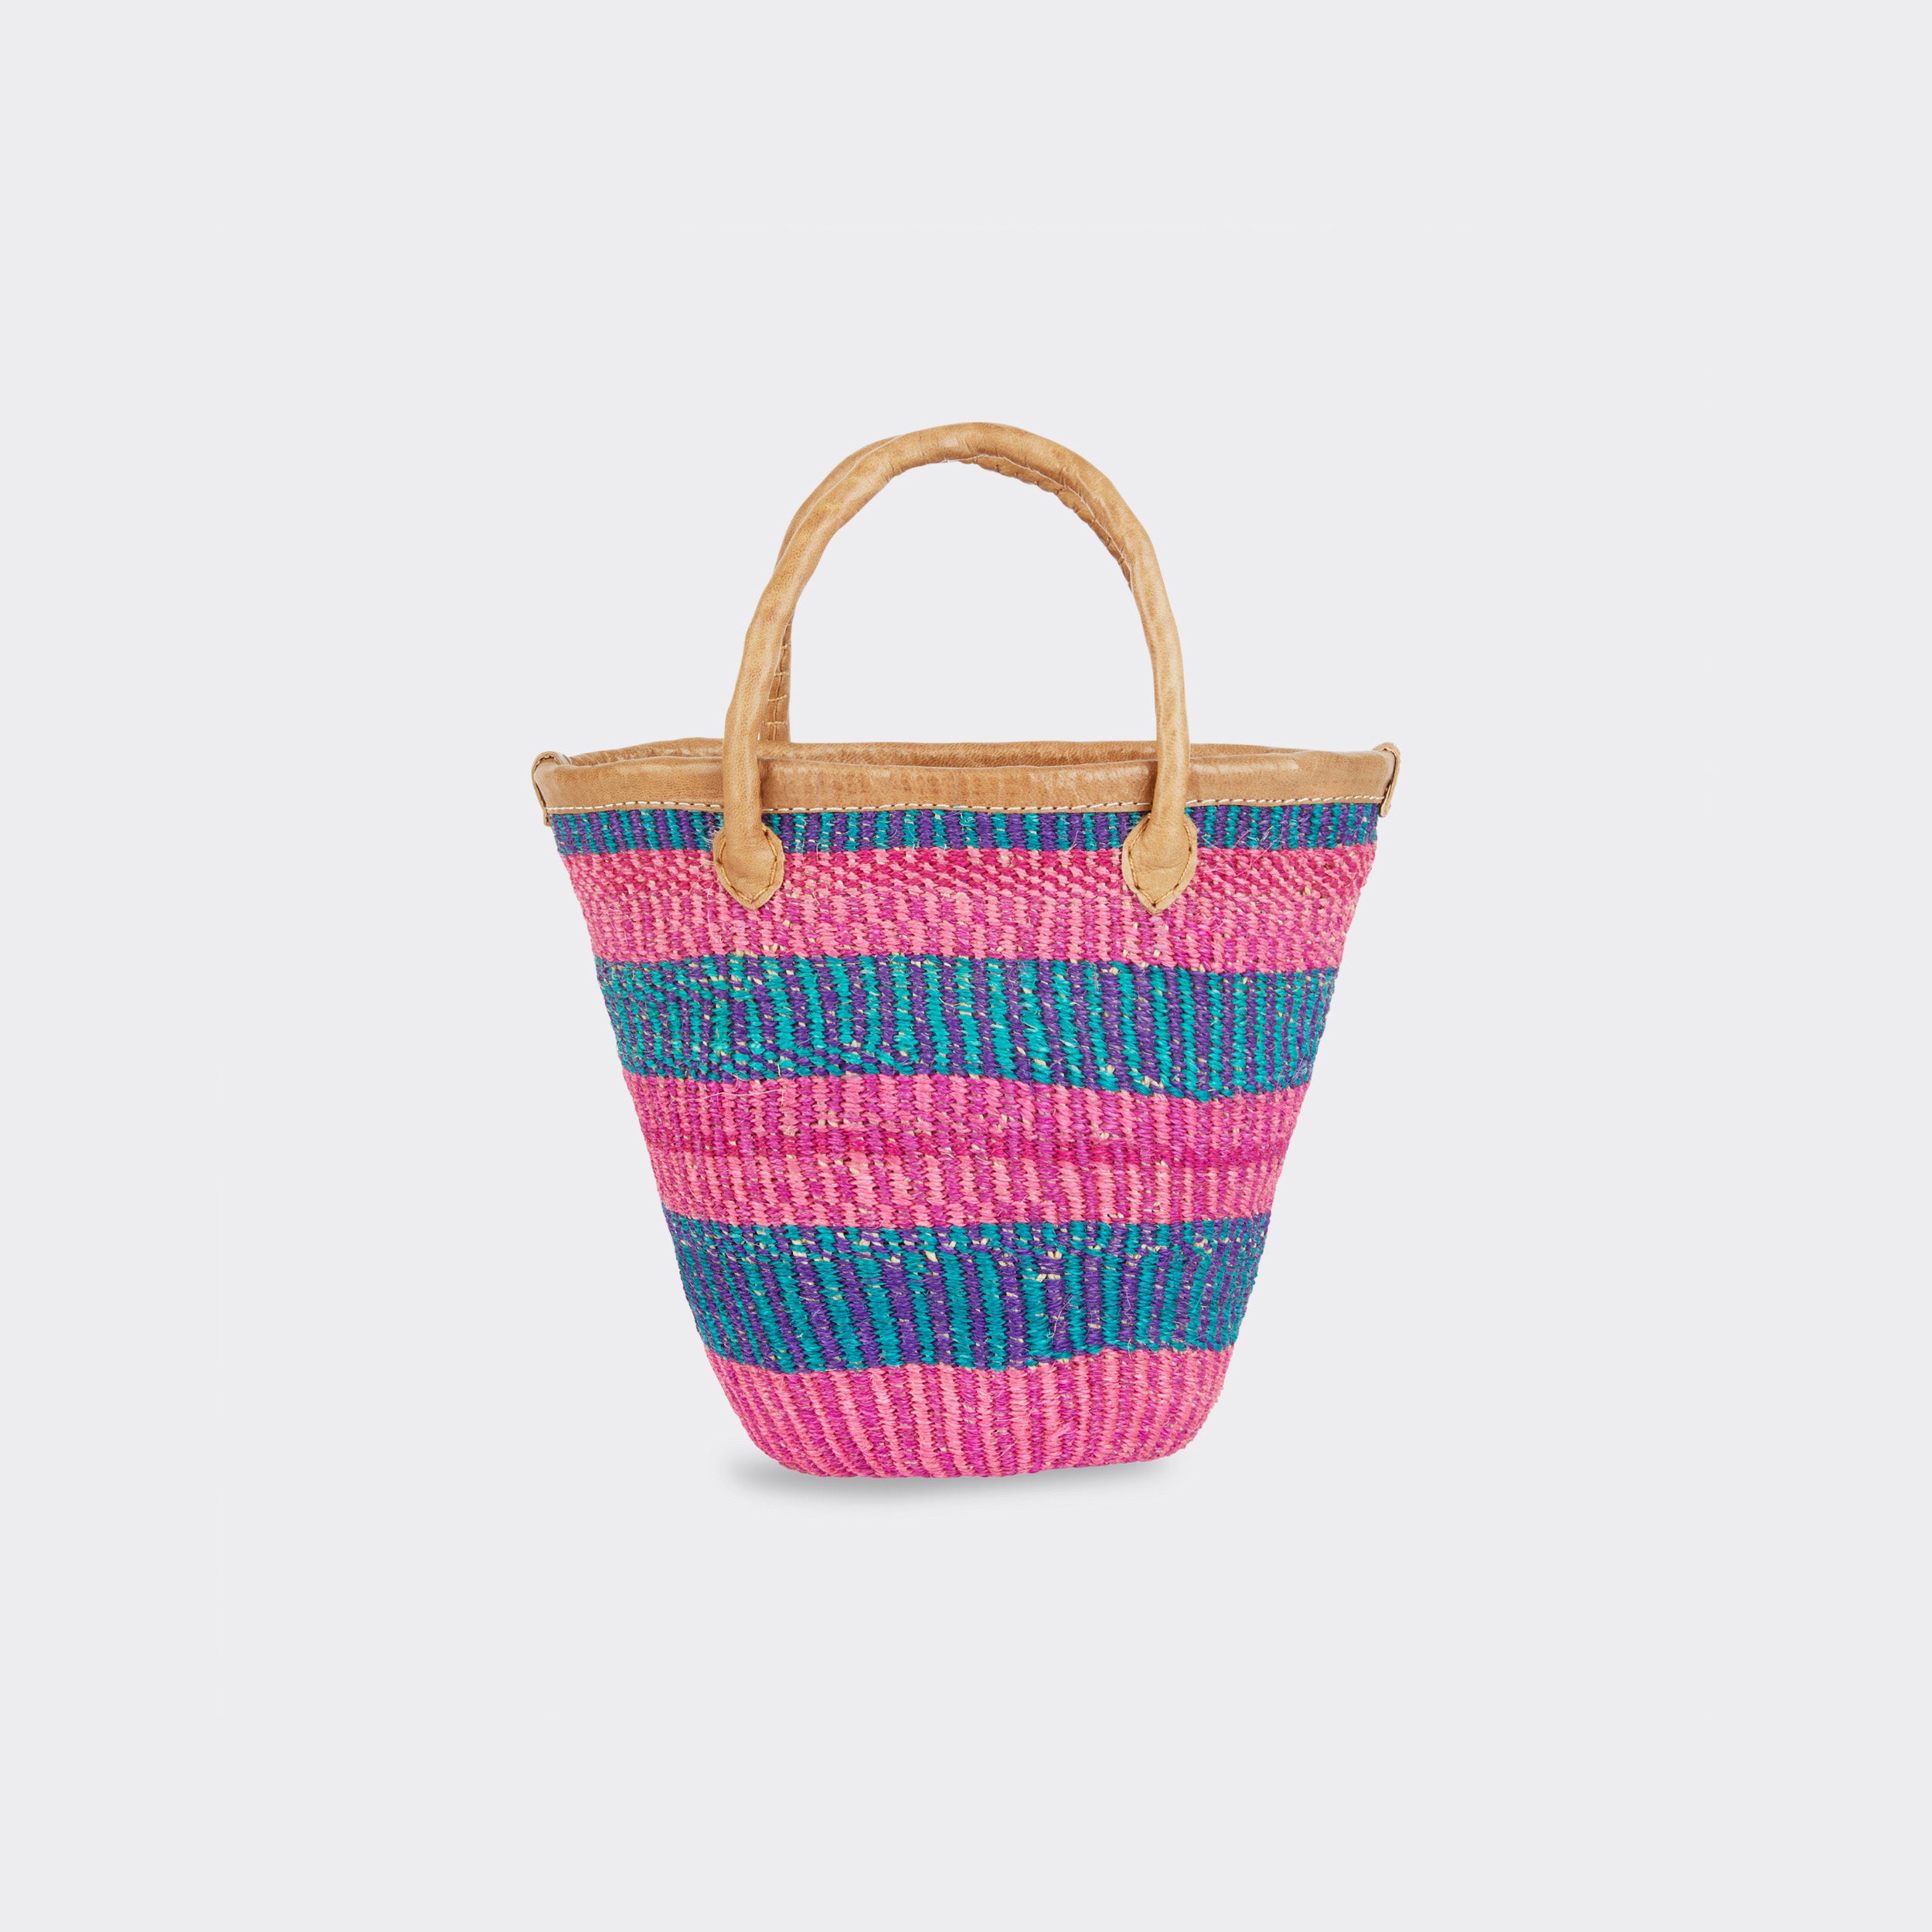 Still life: Mini Shopping Bag in Sisal Pink & Blue.